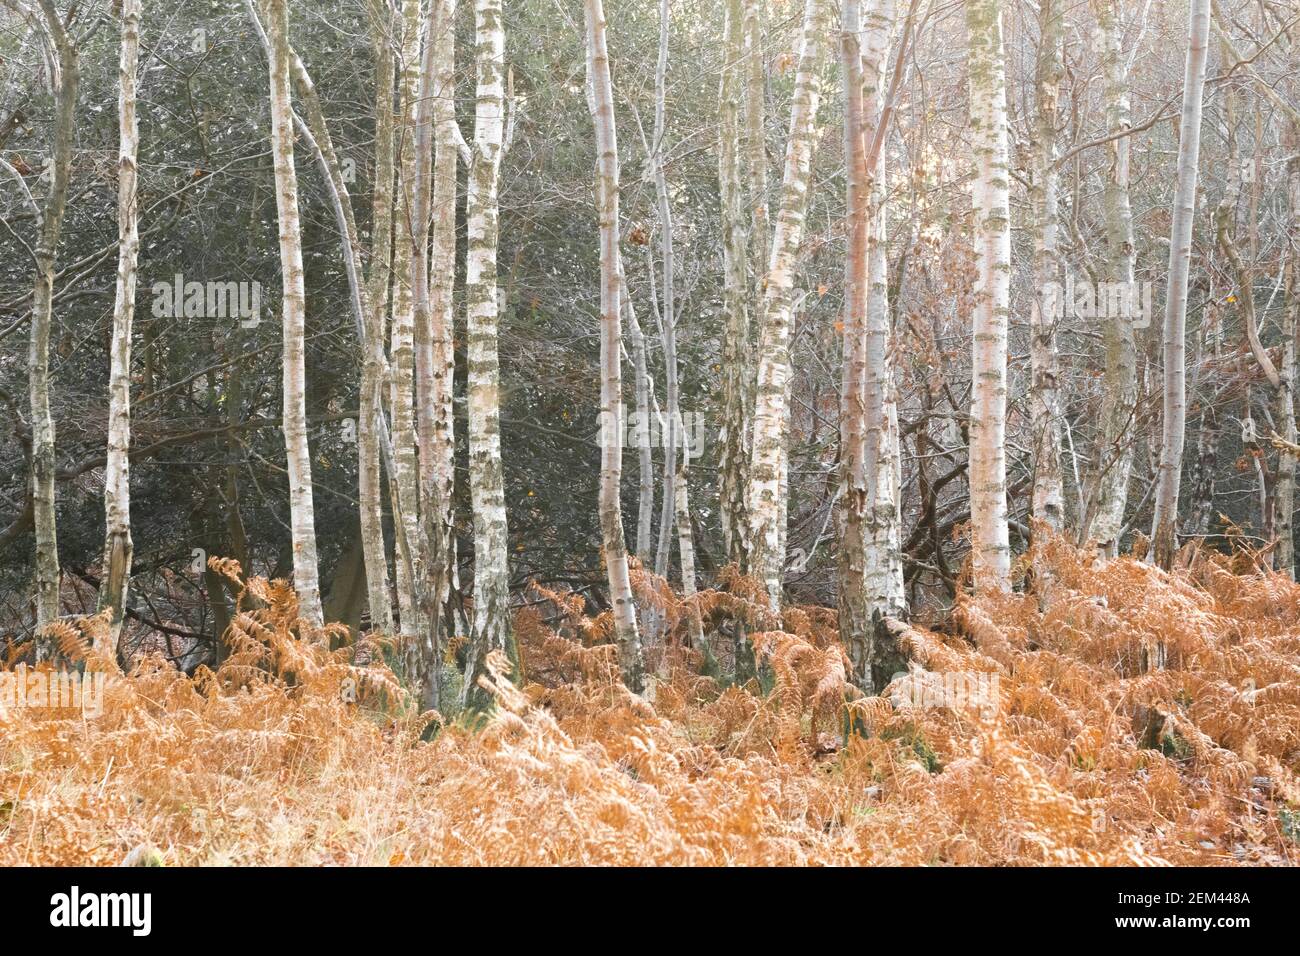 Silver birch trees growing in the bracken, Frithsden Beeches, Berkhampstead, Hertfordshire, UK Stock Photo